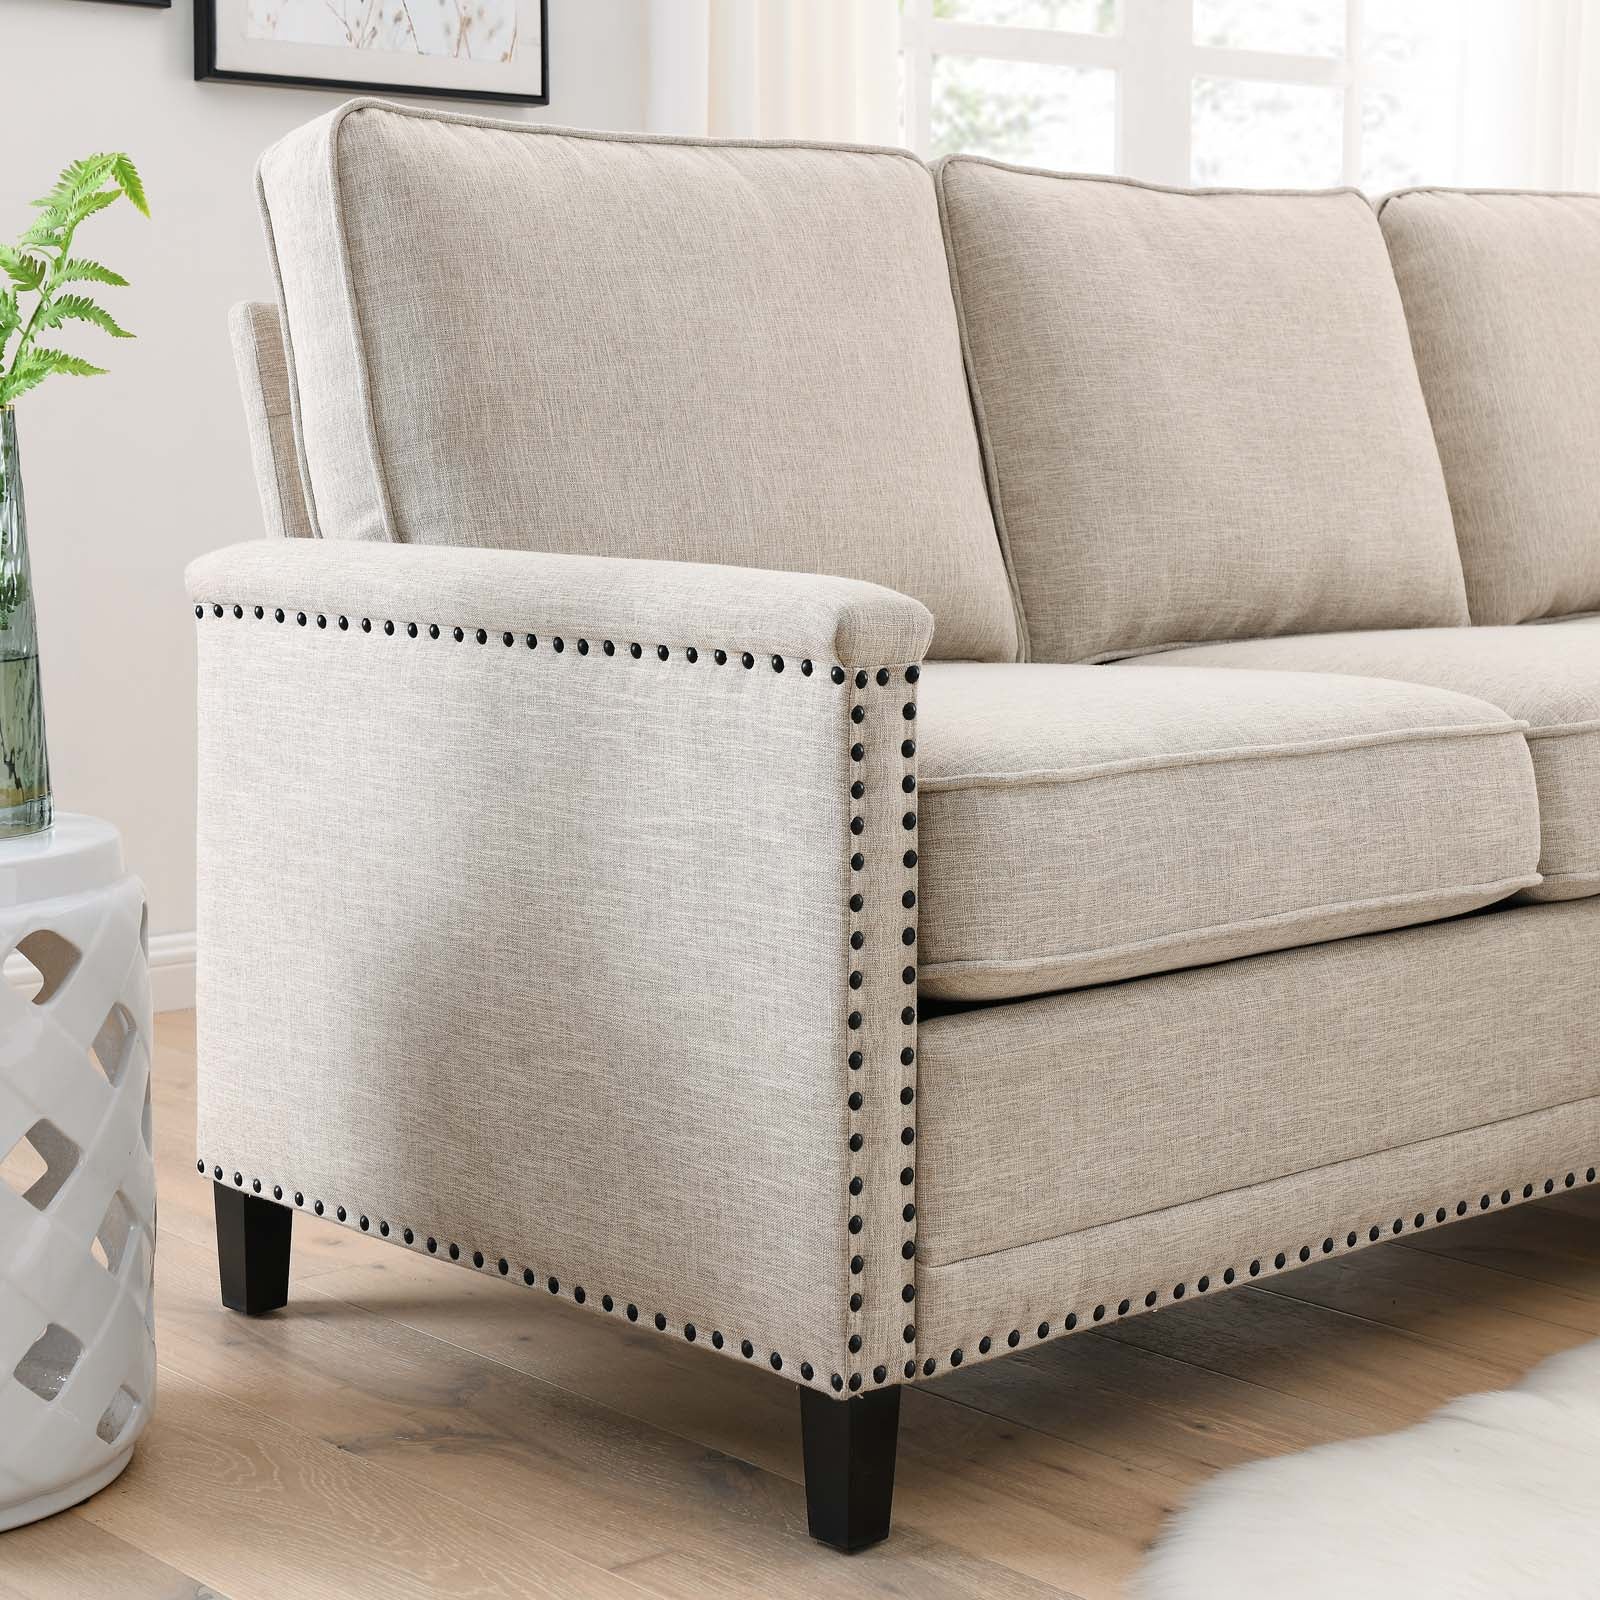 Ashton Upholstered Fabric Sectional Sofa